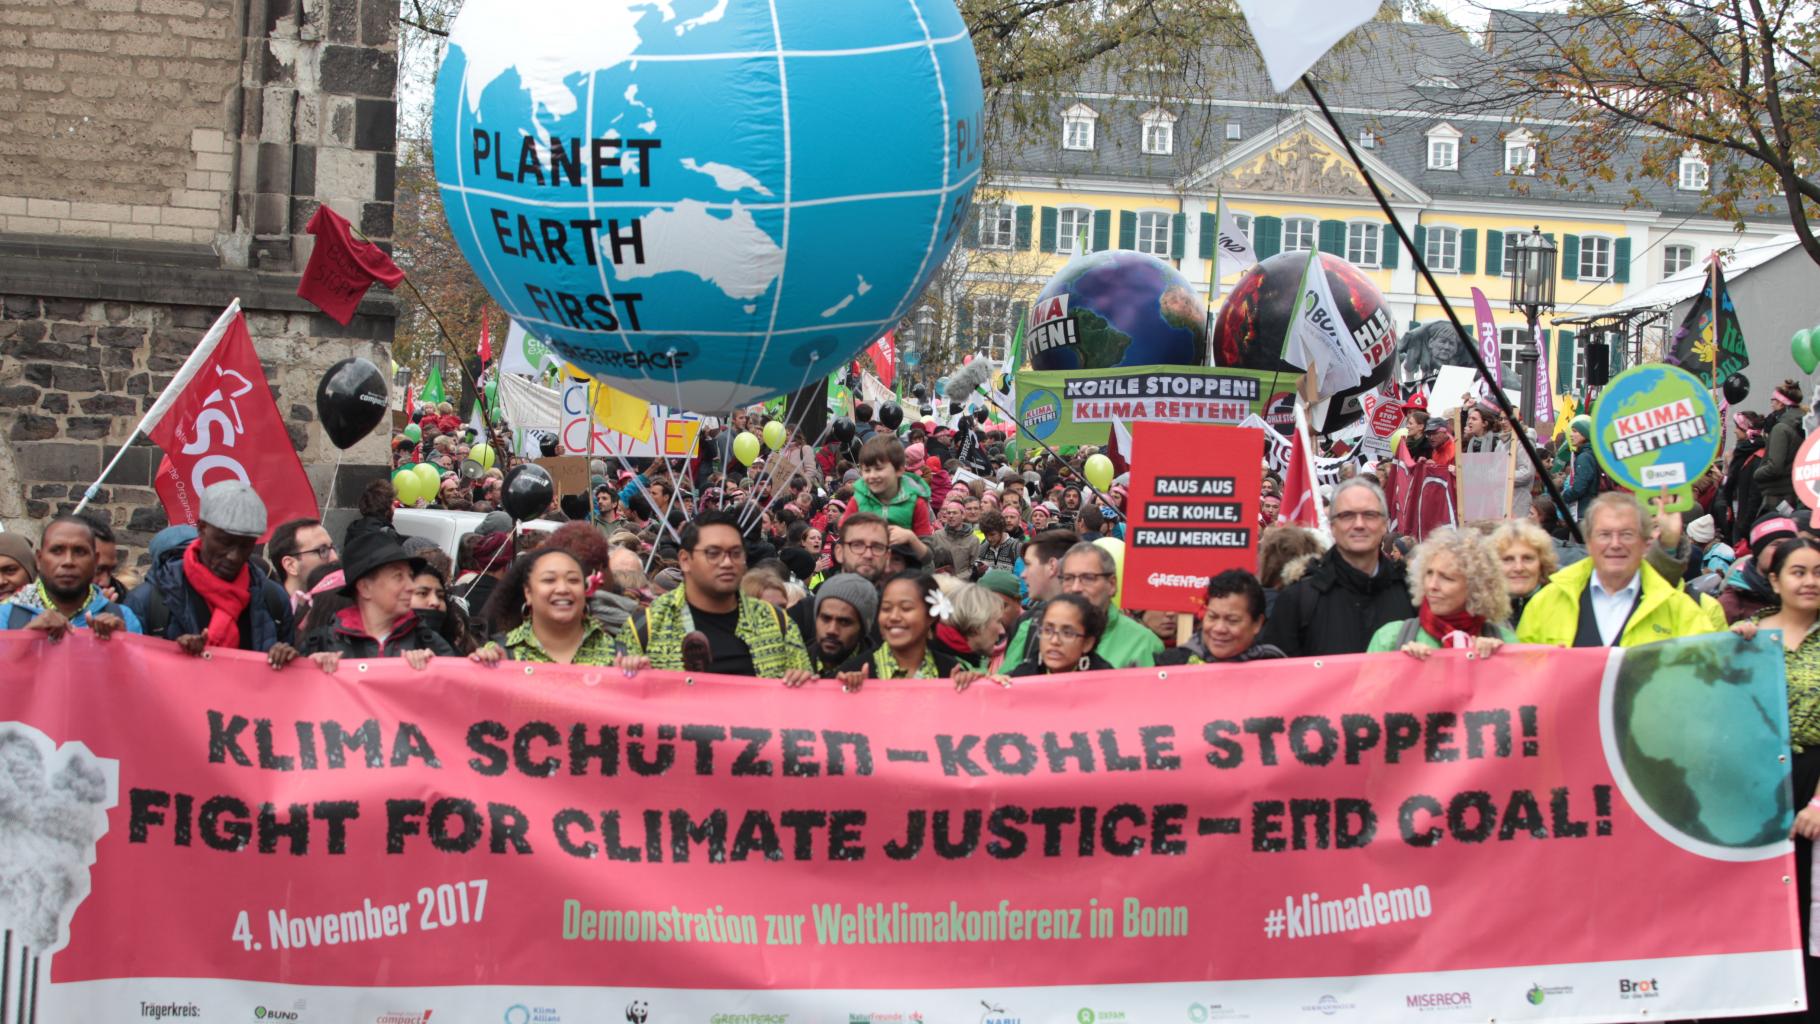 Demonstration zur Weltklimakonferenz in Bonn - Klima schützen - Kohle stoppen!